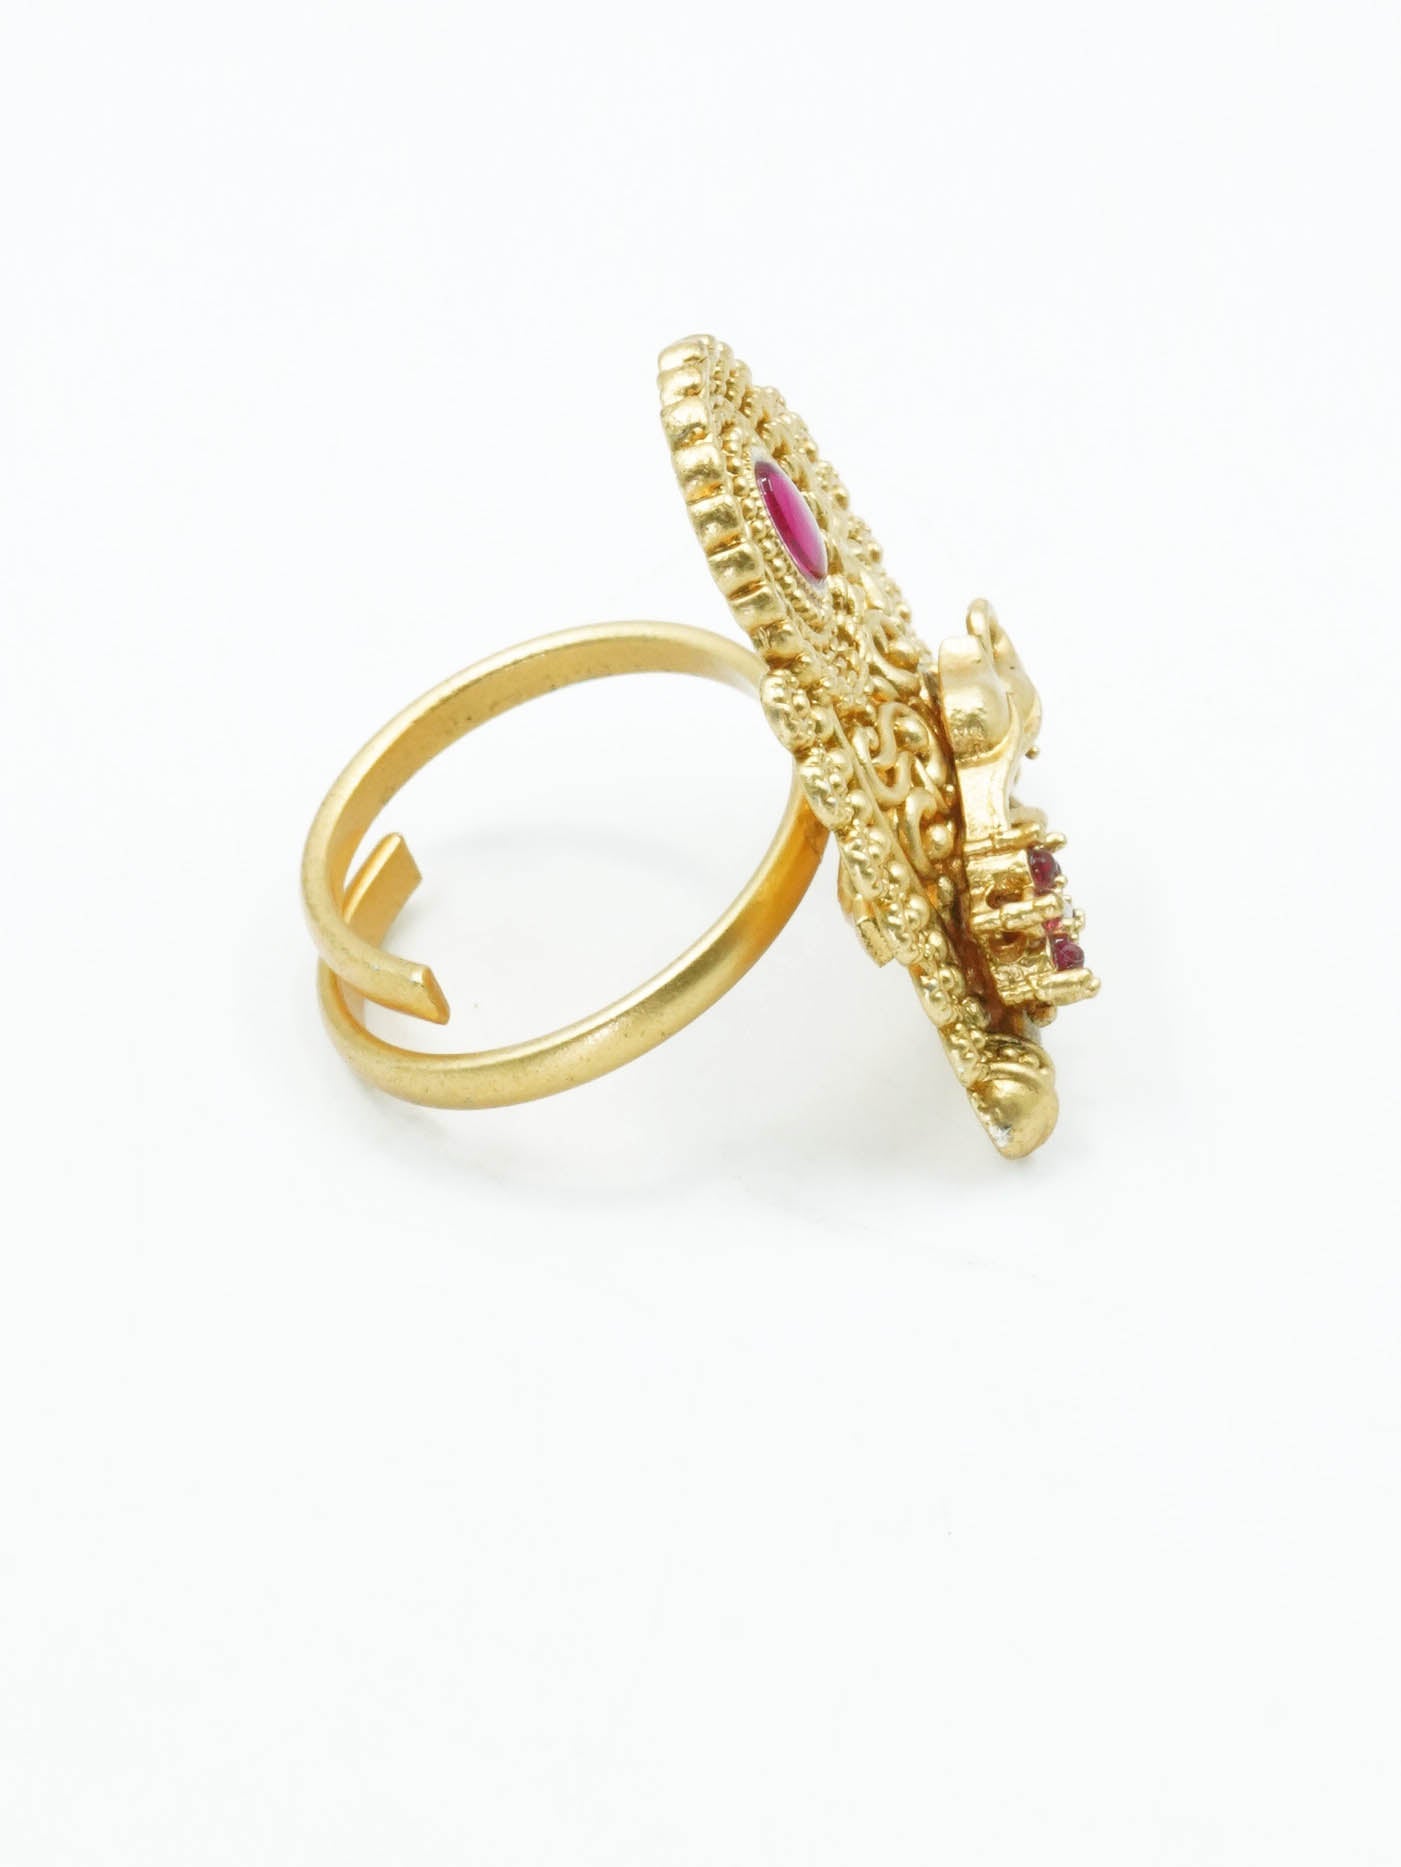 Antique Gold Plated Adjustable Size Designer Finger ring with Stones 11064N